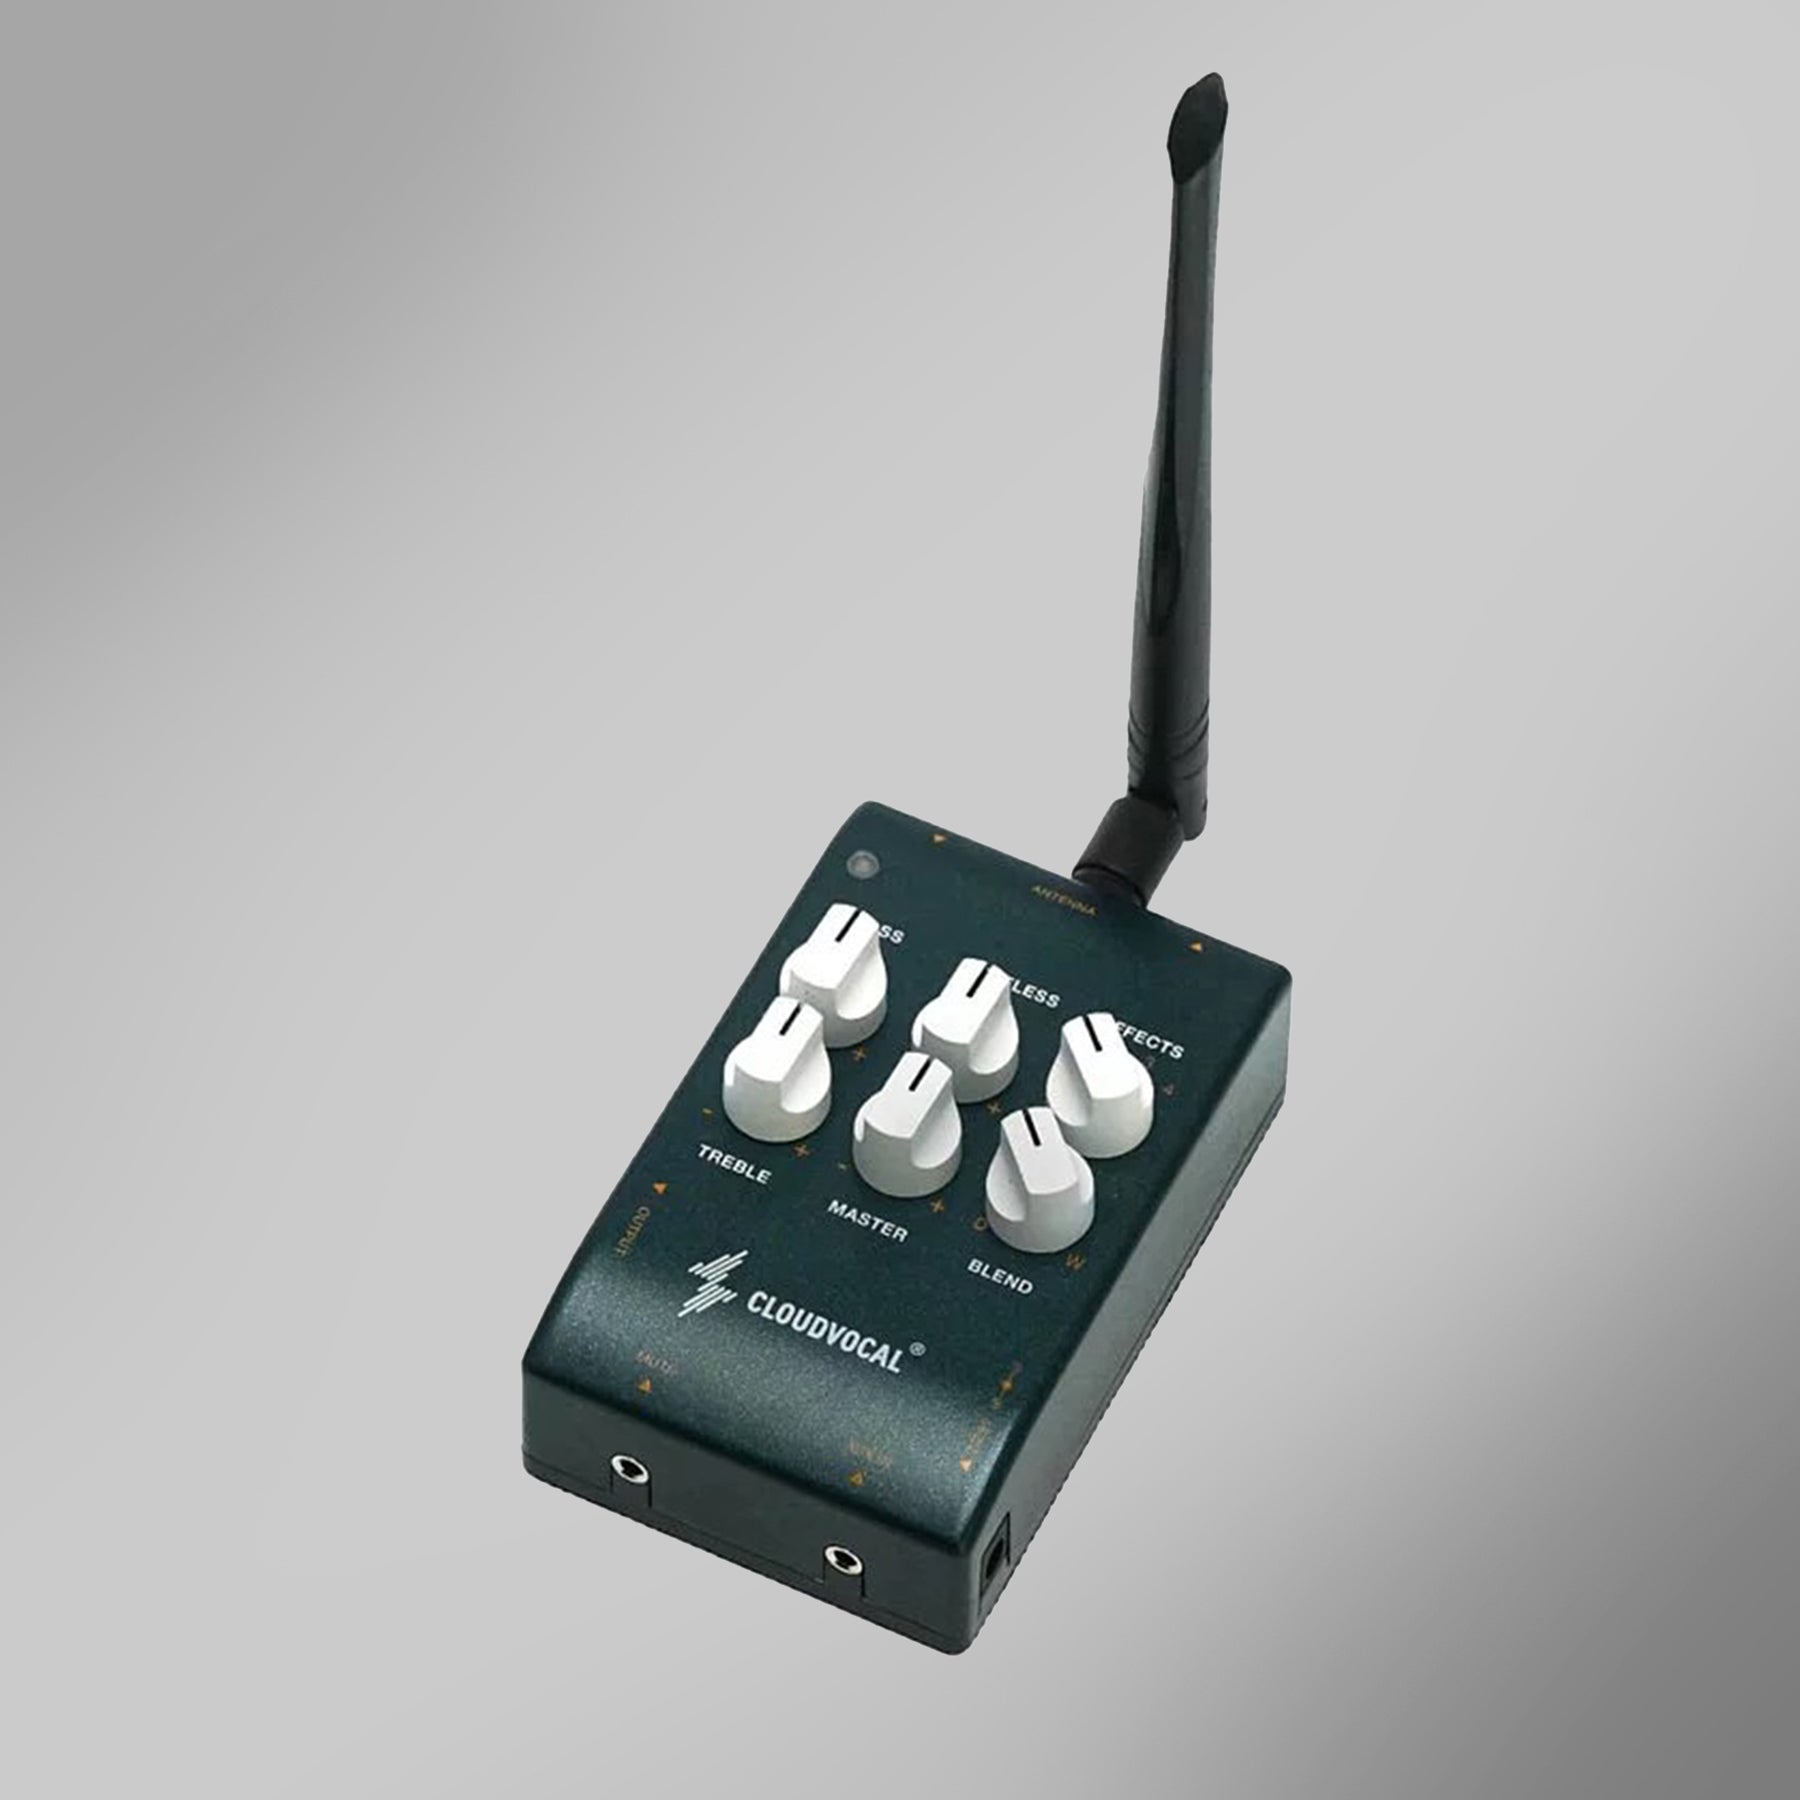 ISOLO LITE - Saxophone Wireless System